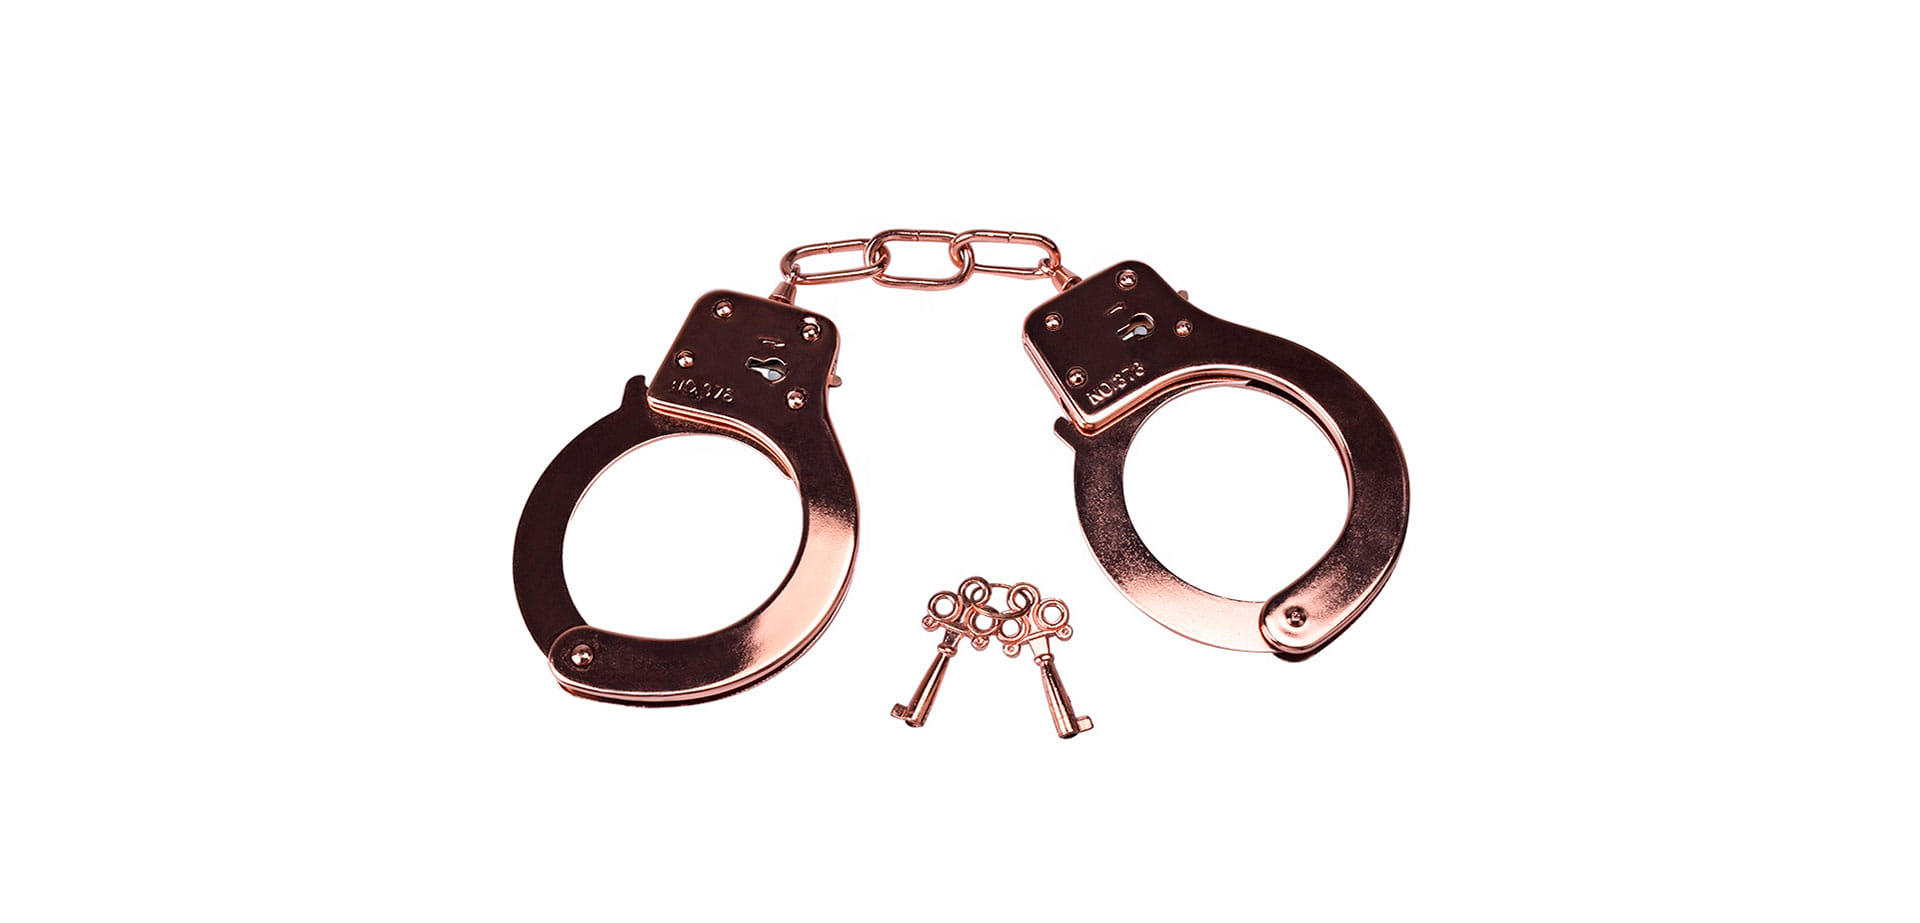 Bondage Metal Sex Handcuffs.